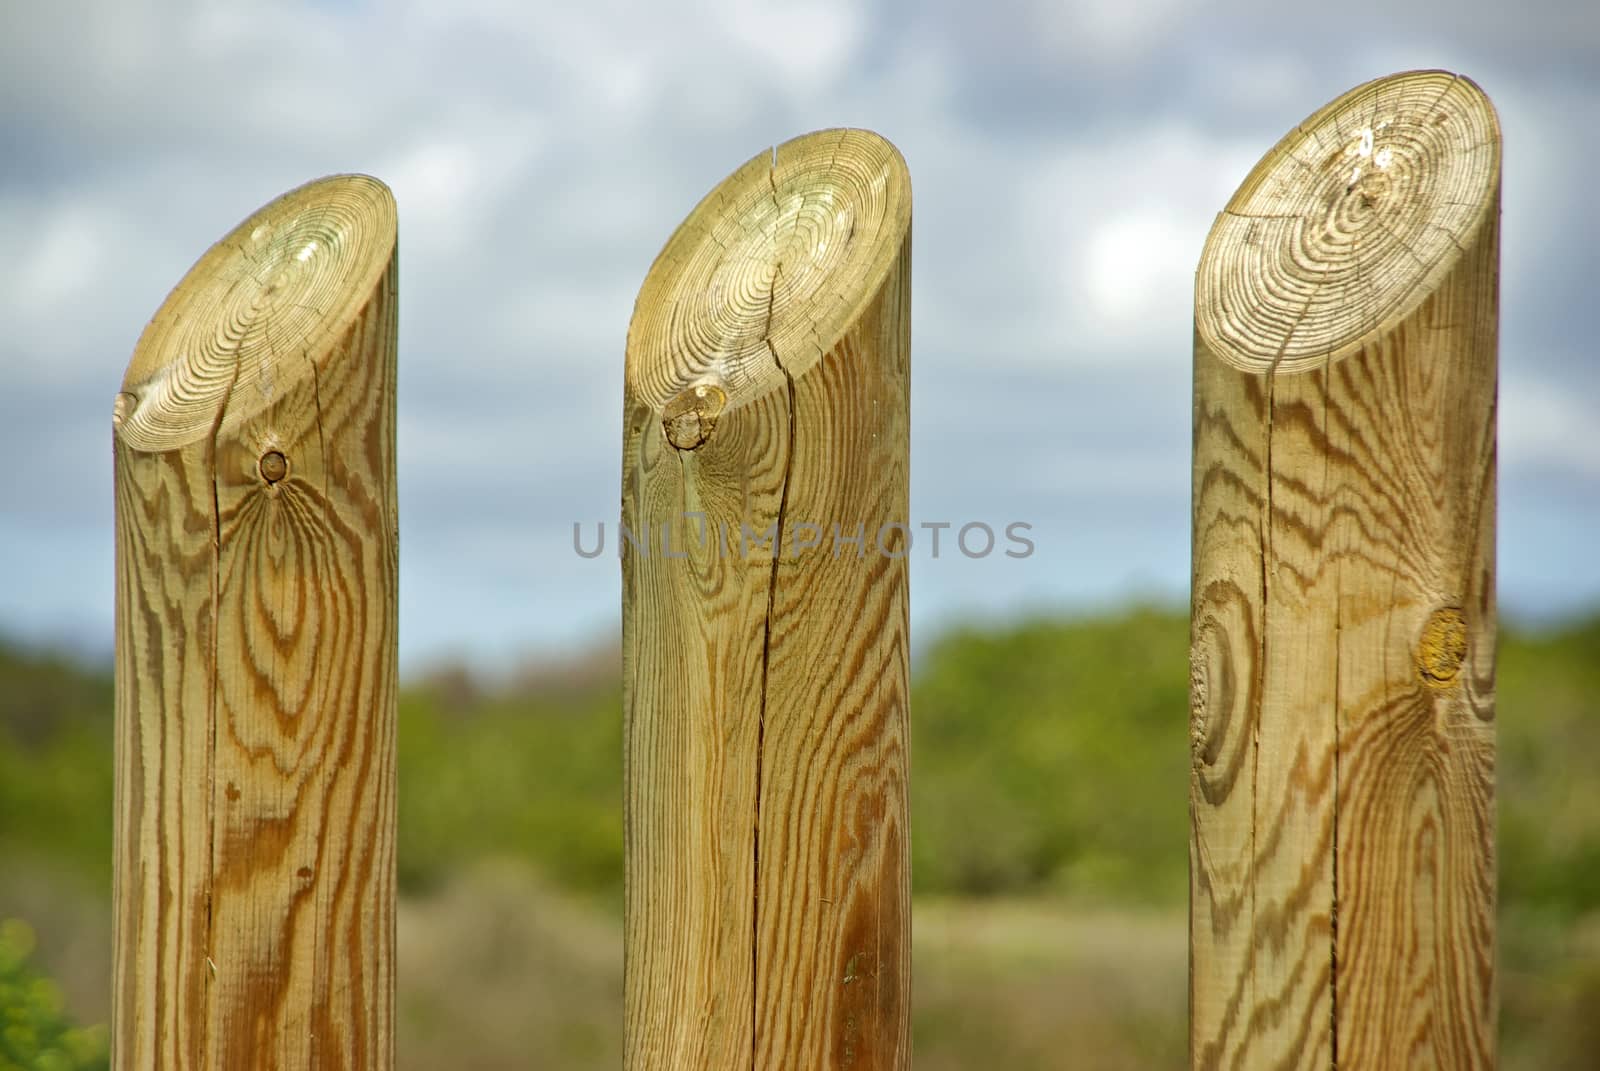 Three poles made of wood